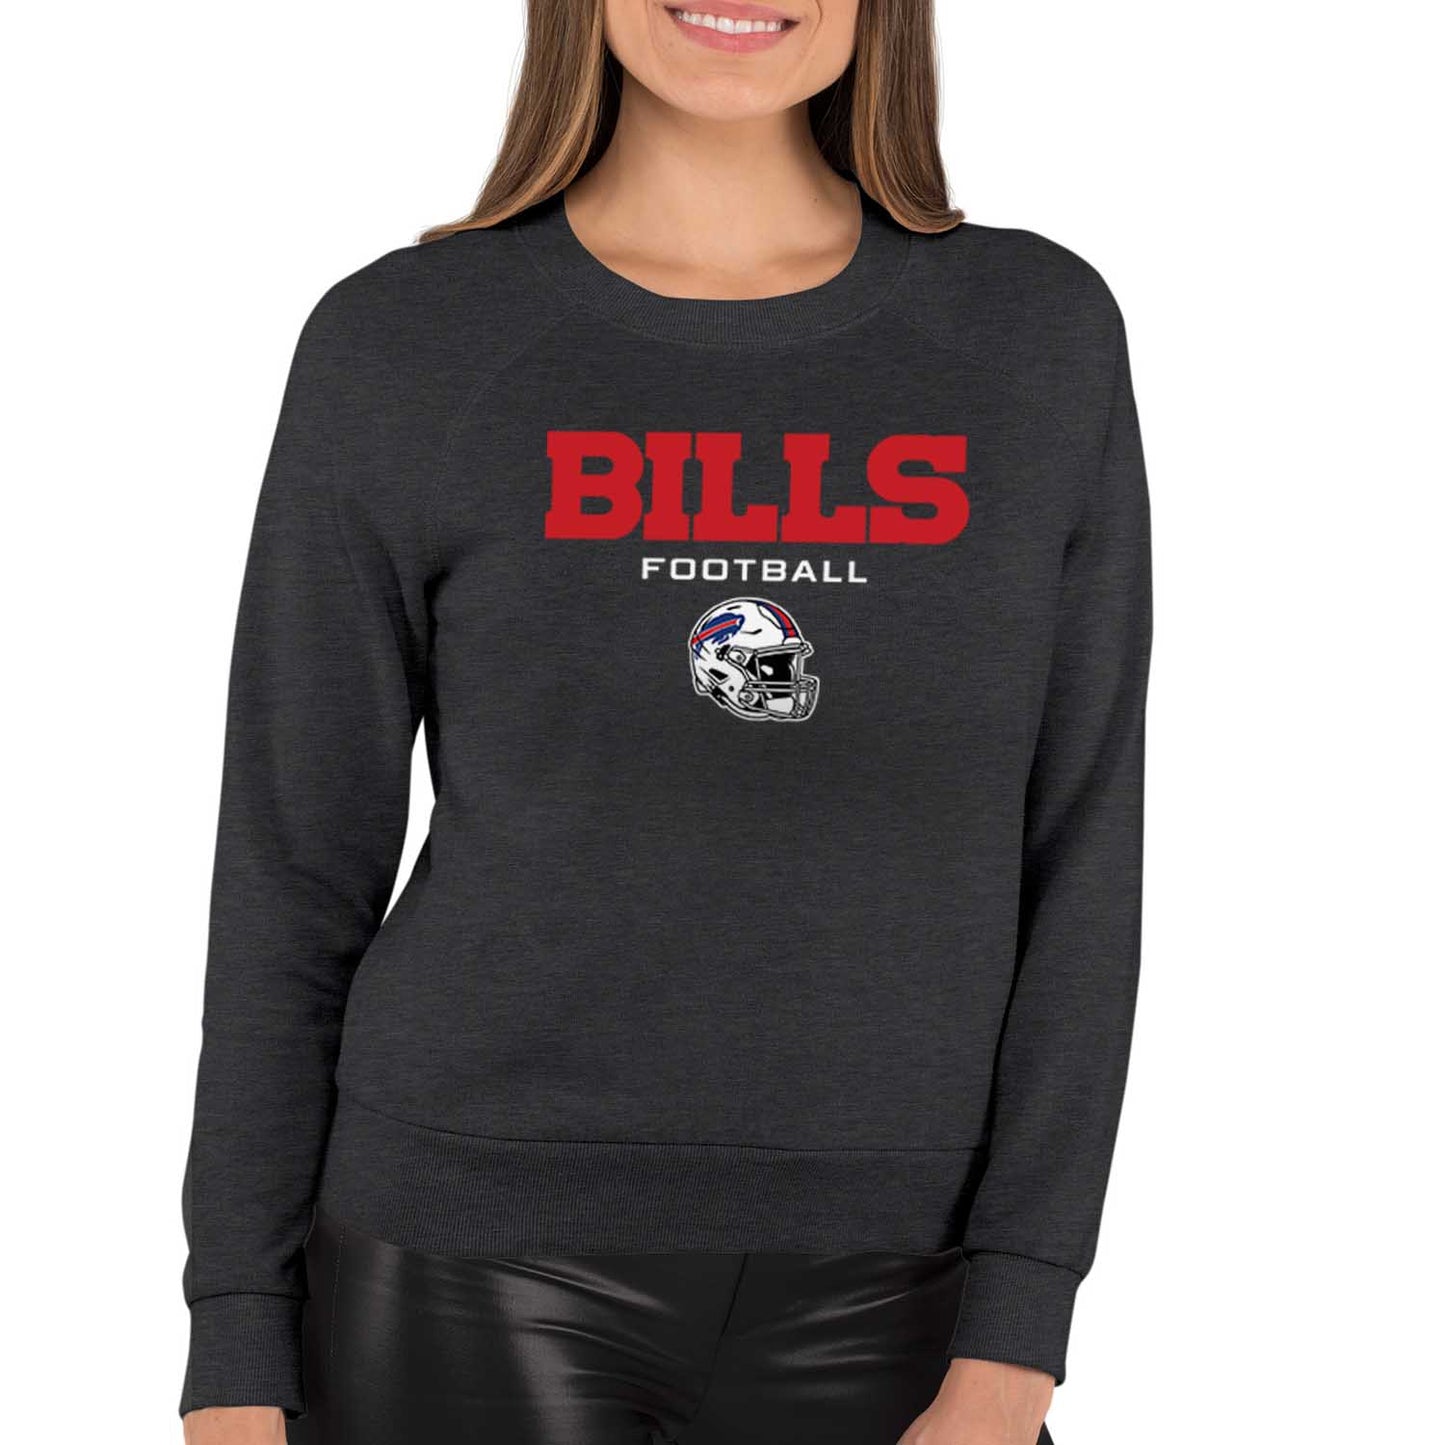 Buffalo Bills Women's NFL Football Helmet Charcoal Slouchy Crewneck -Tagless Lightweight Pullover - Charcoal